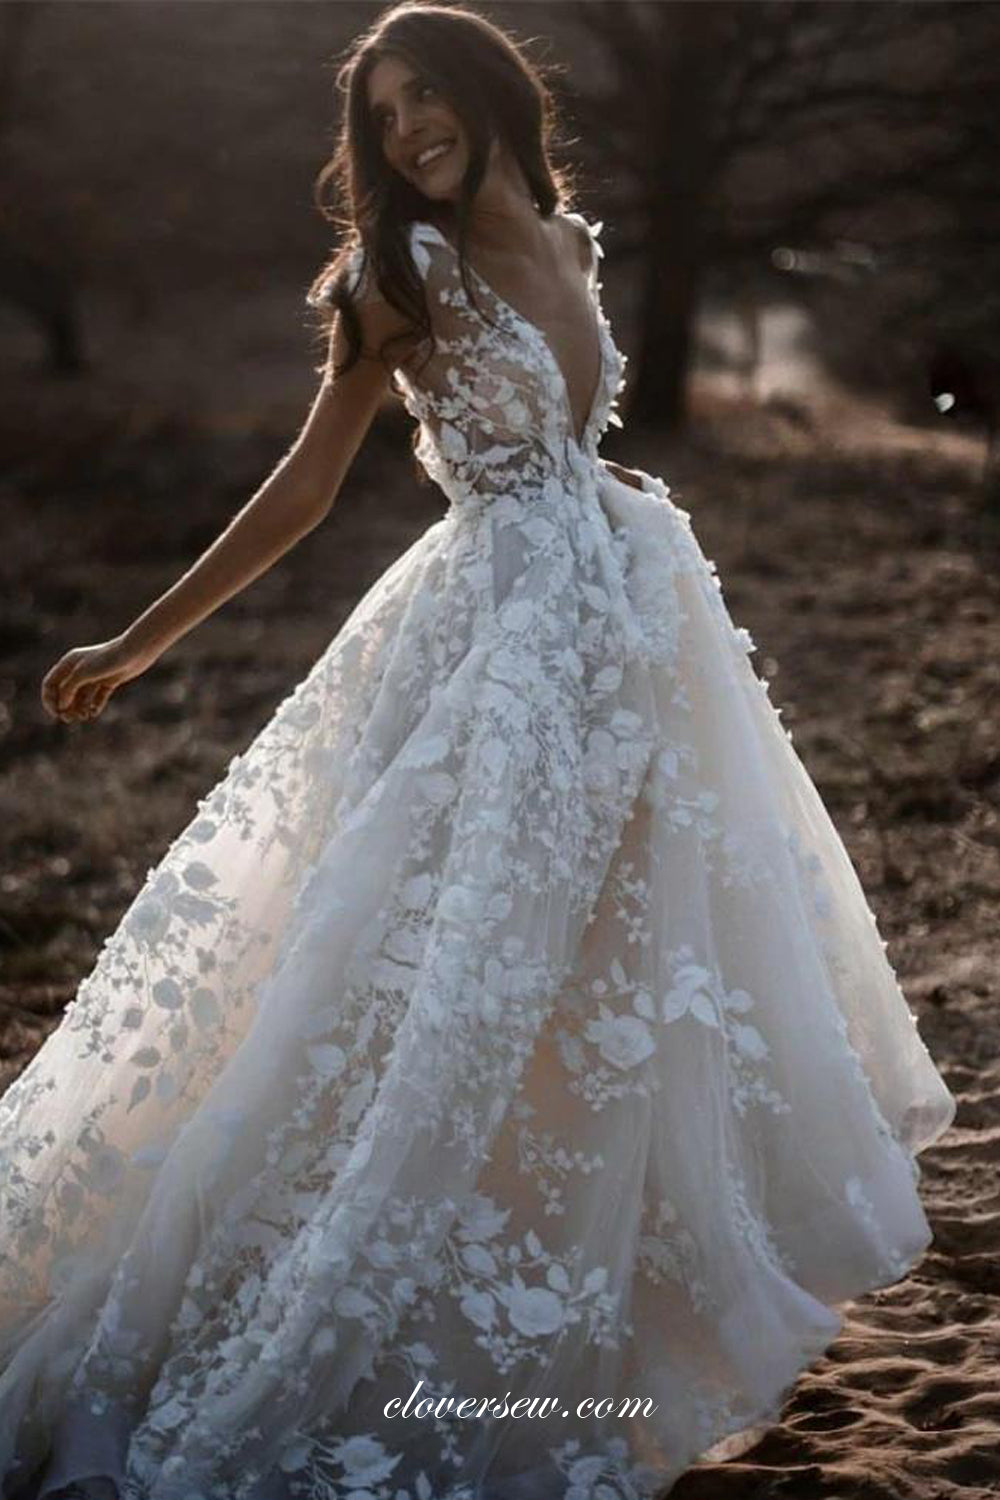 Bridal Wedding Dress Trend: Floral Wedding Dress